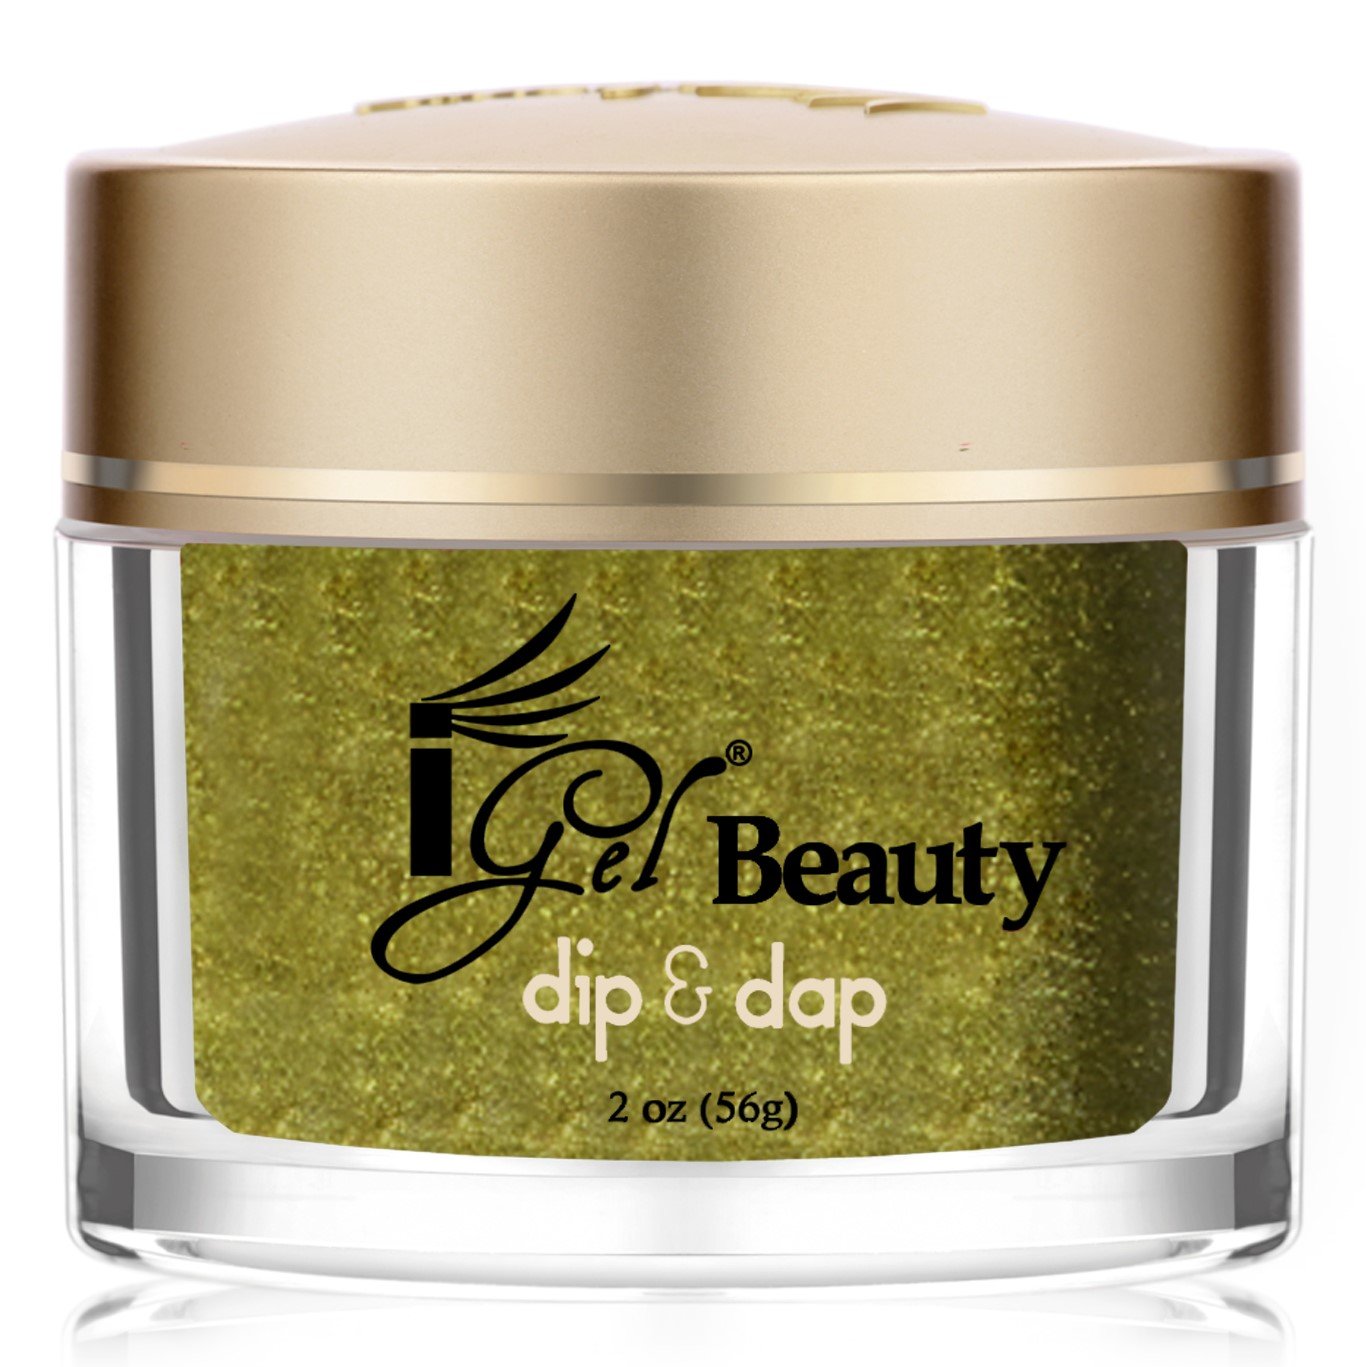 iGel Beauty - Dip & Dap Powder - DD104 Jester